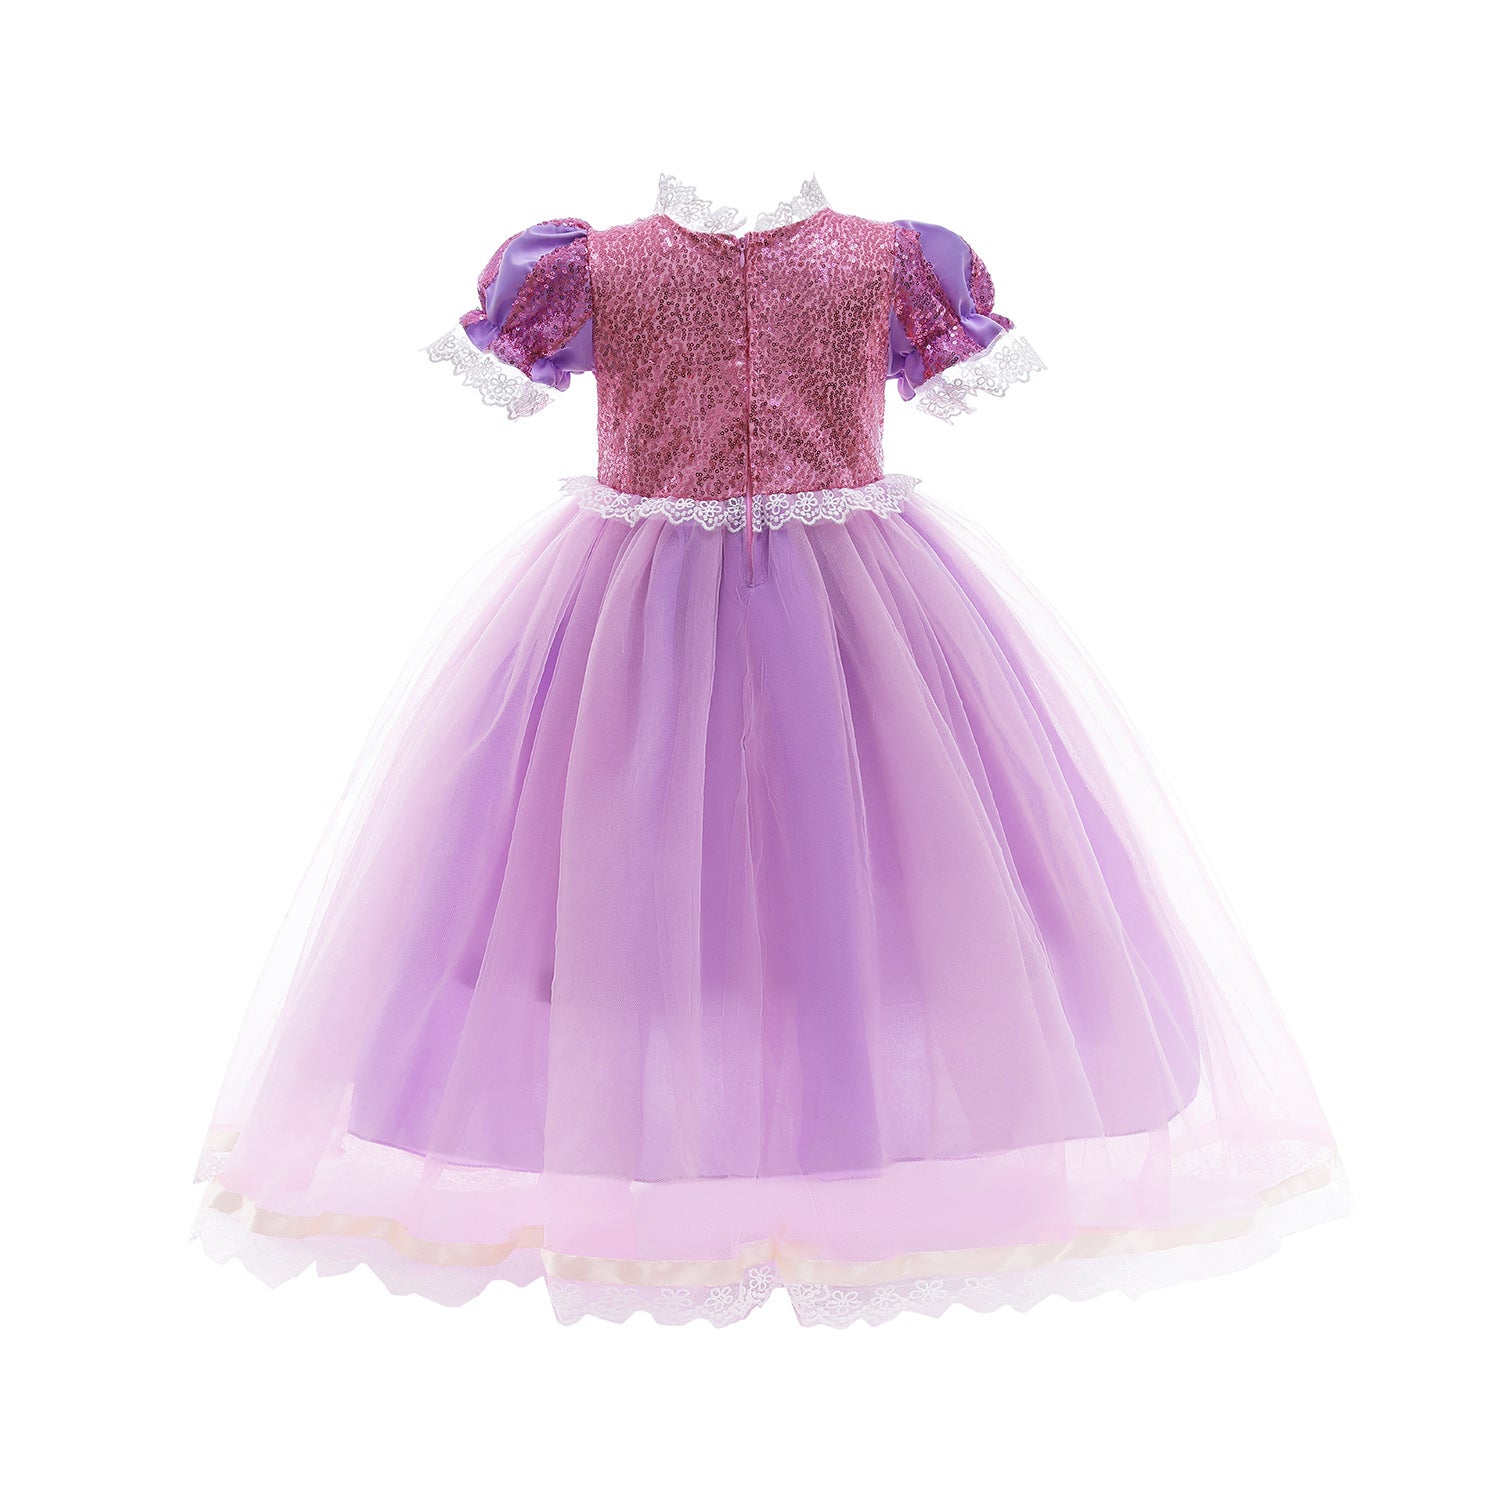 New Rapunzel Girl Costume Princess Dresses For Halloween Birthday Party